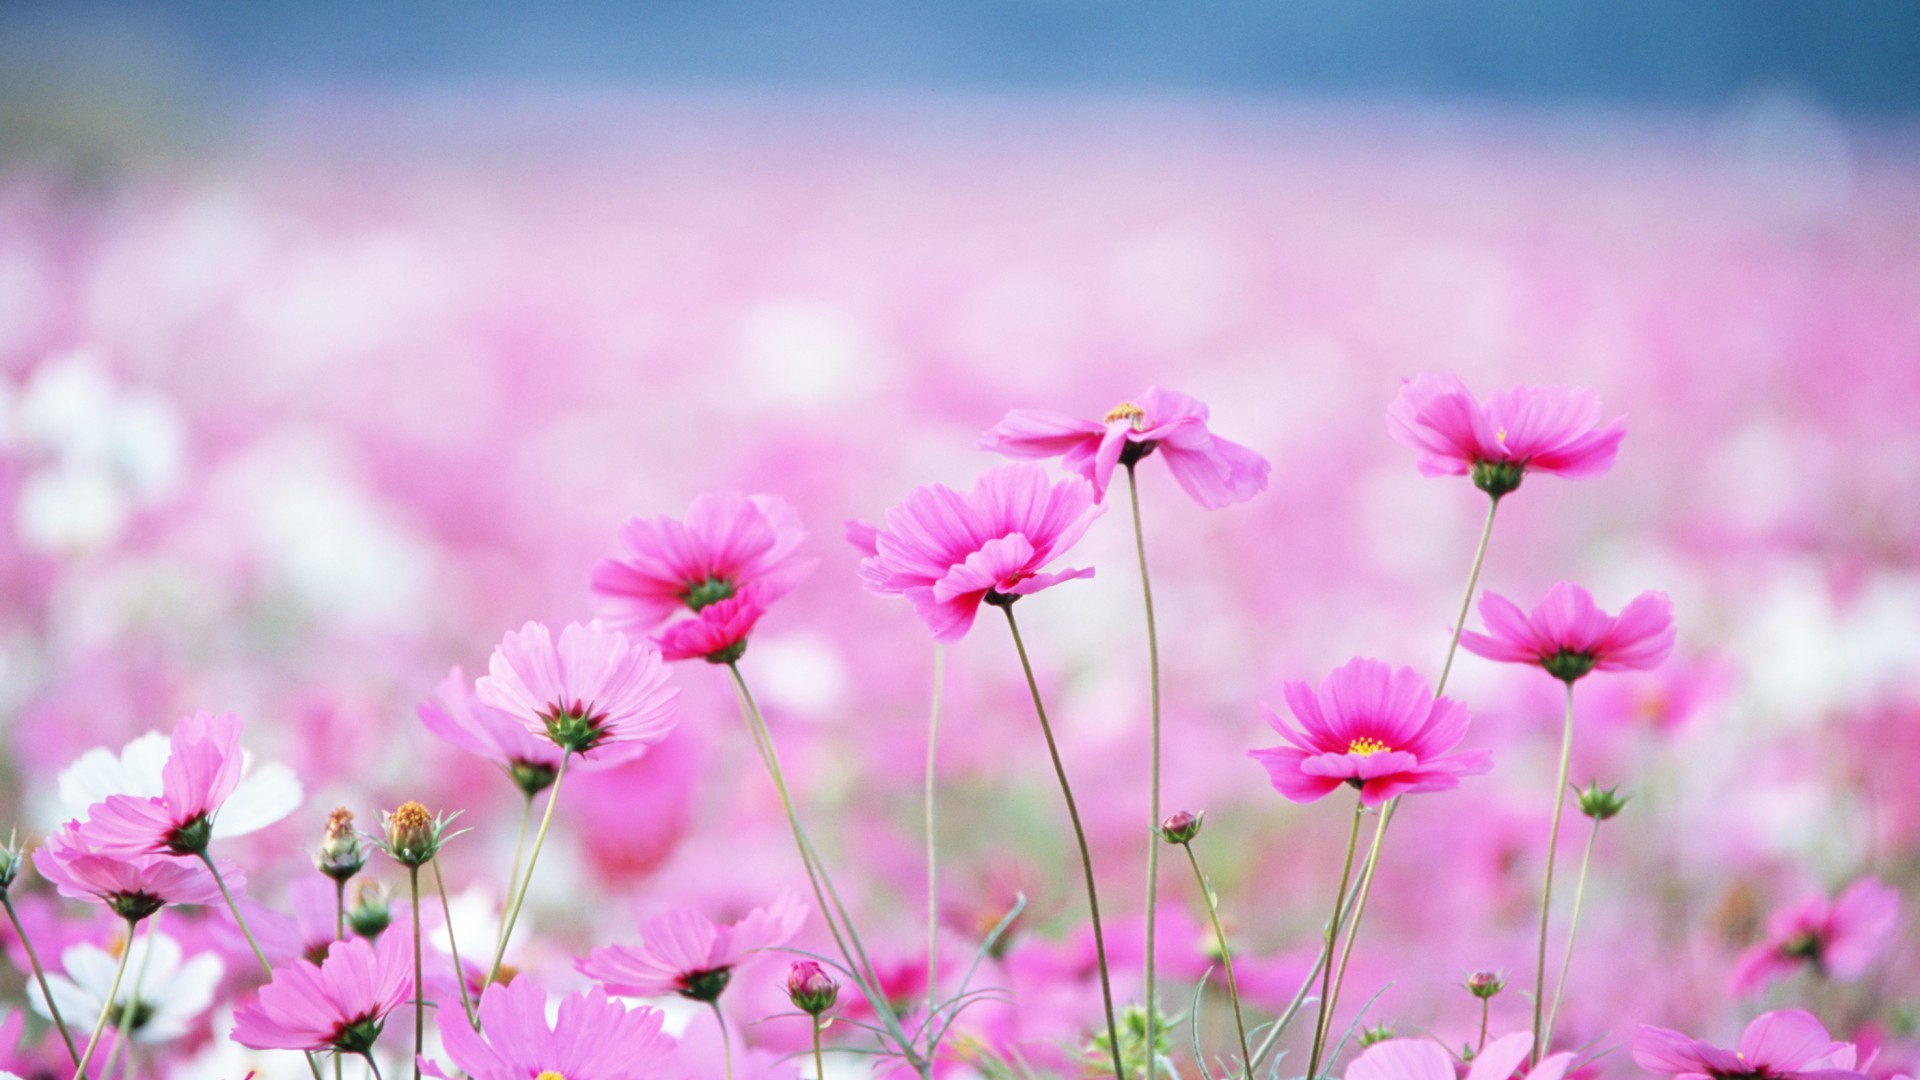 Полевые цветы, HD, 4k, поле, розовый, цветок, Wildflowers, HD, 4k wallpaper, field, pink, flower (horizontal)